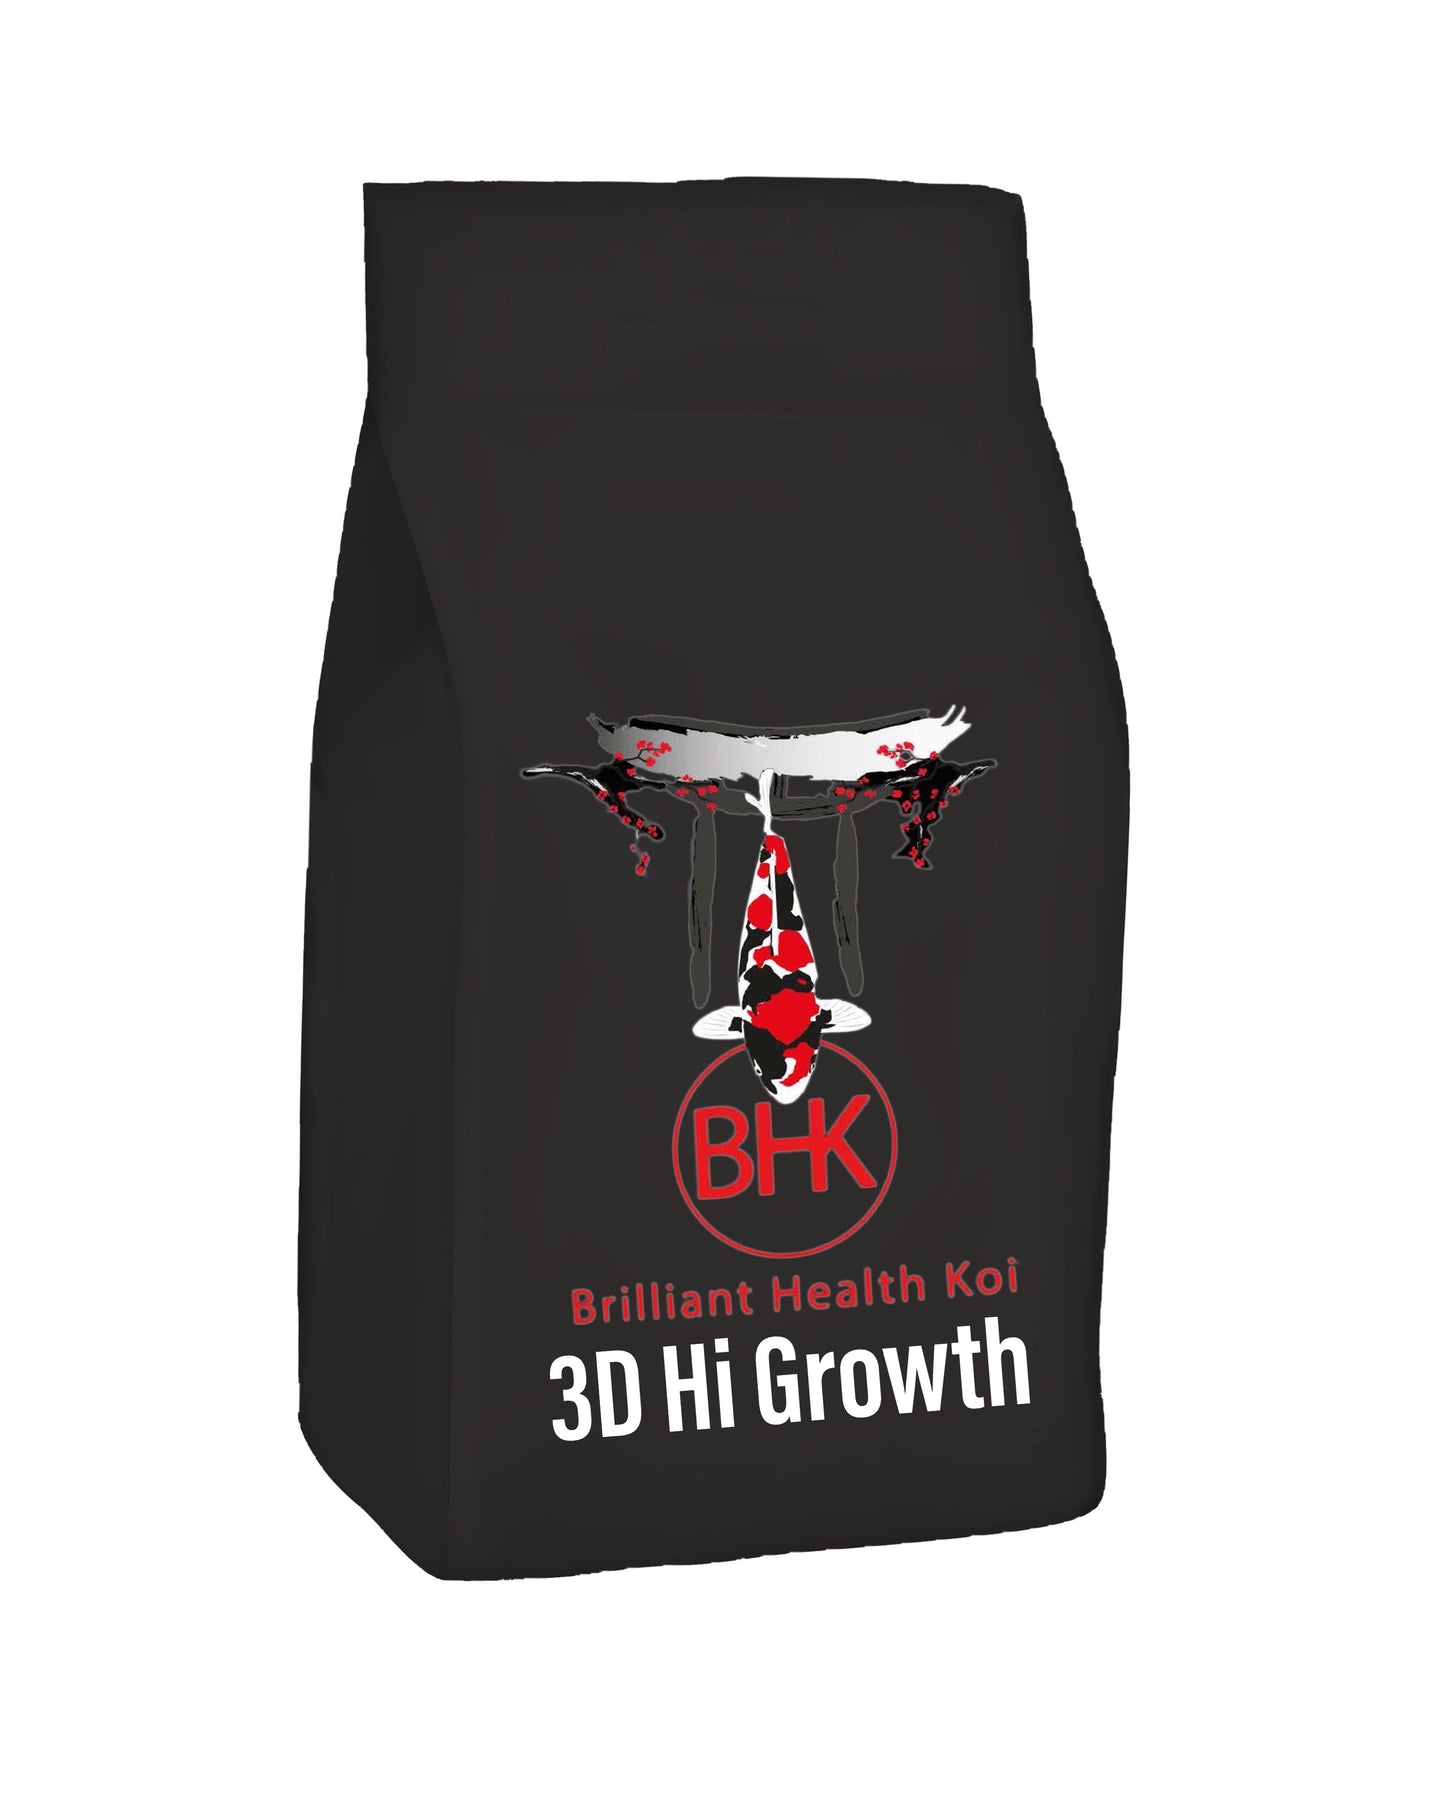 BHK 3D Hi Growth